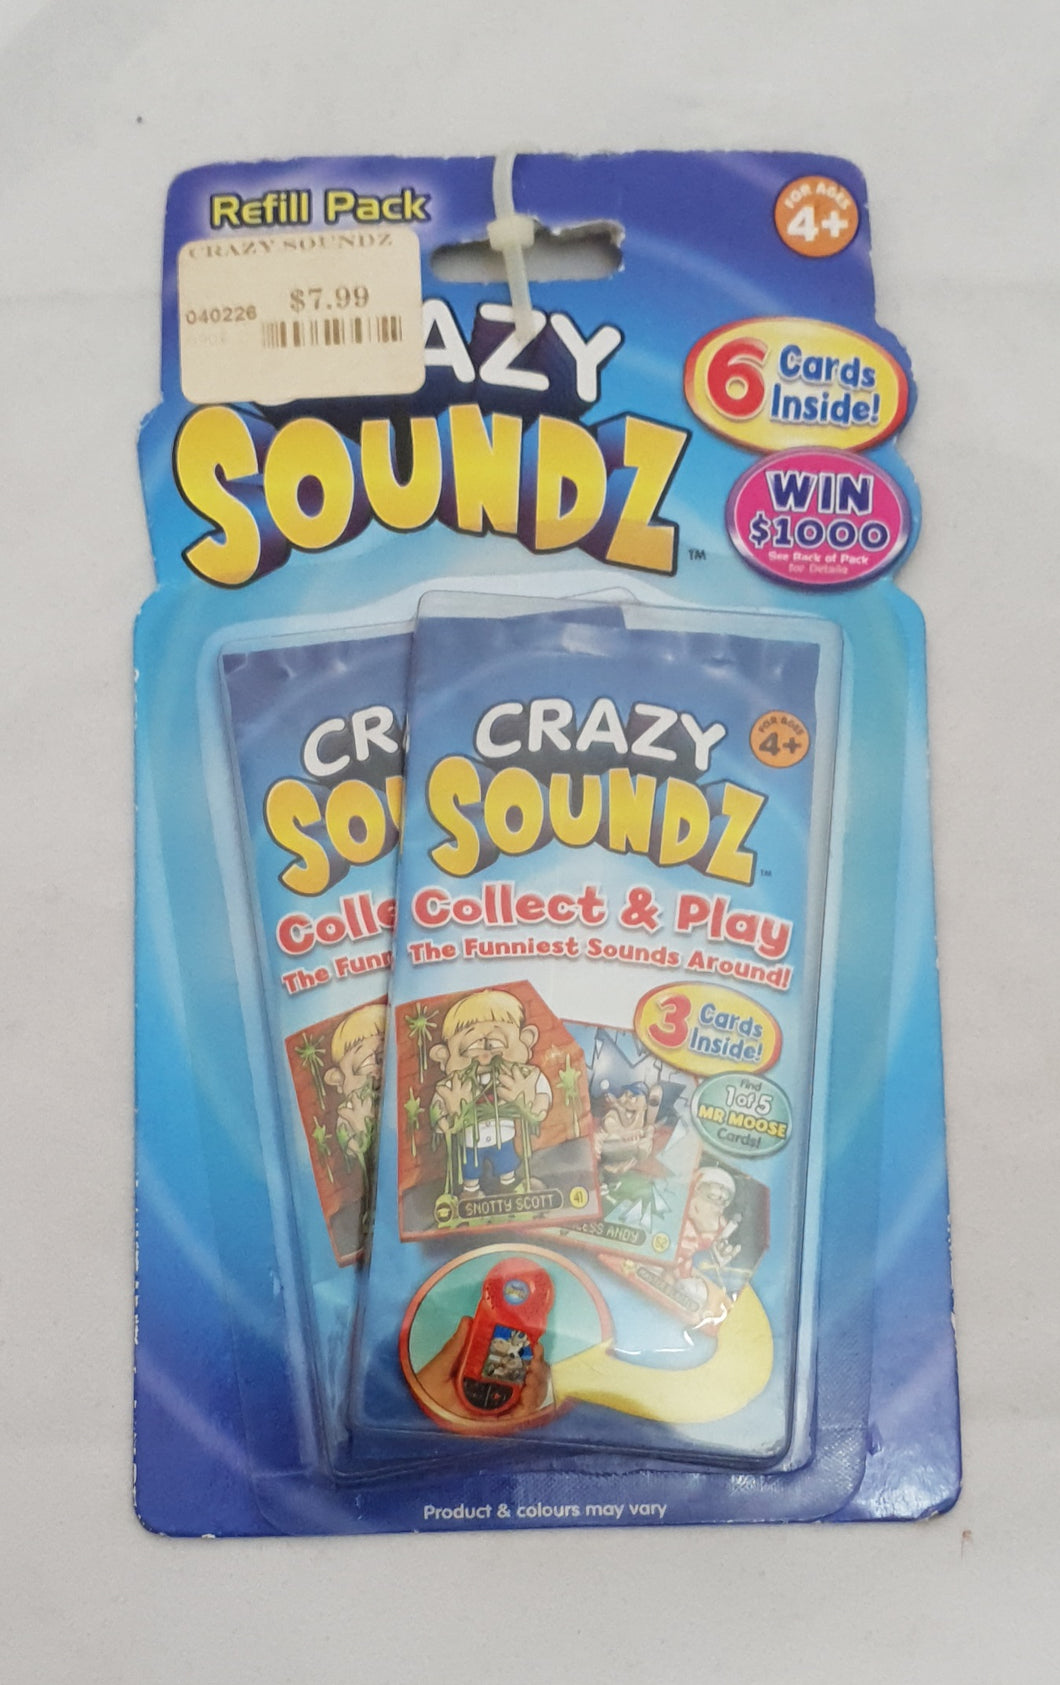 Crazy Soundz Refill pk